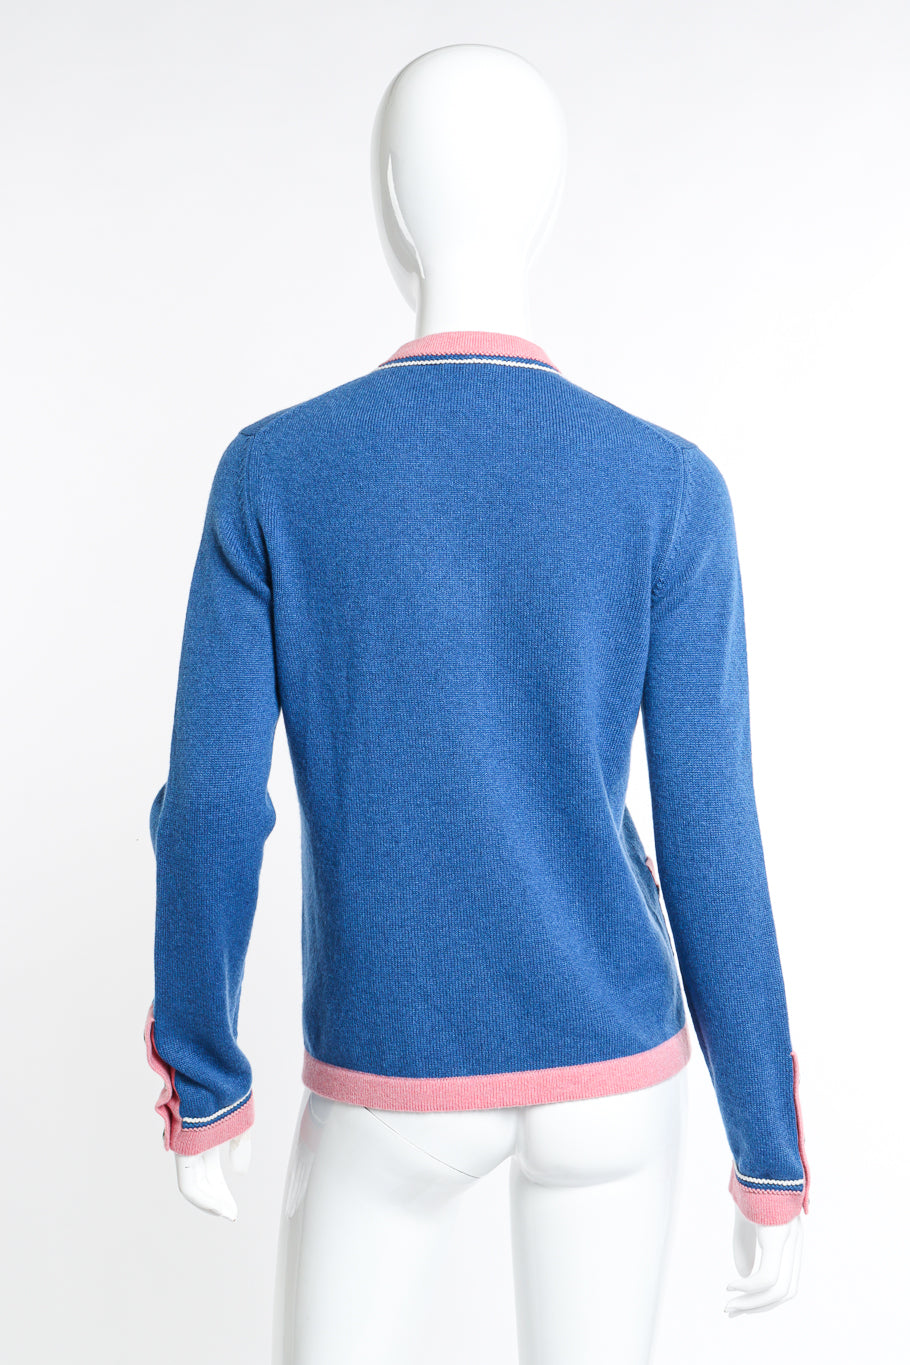 Chanel Cashmere Sweater back on mannequin @recess la